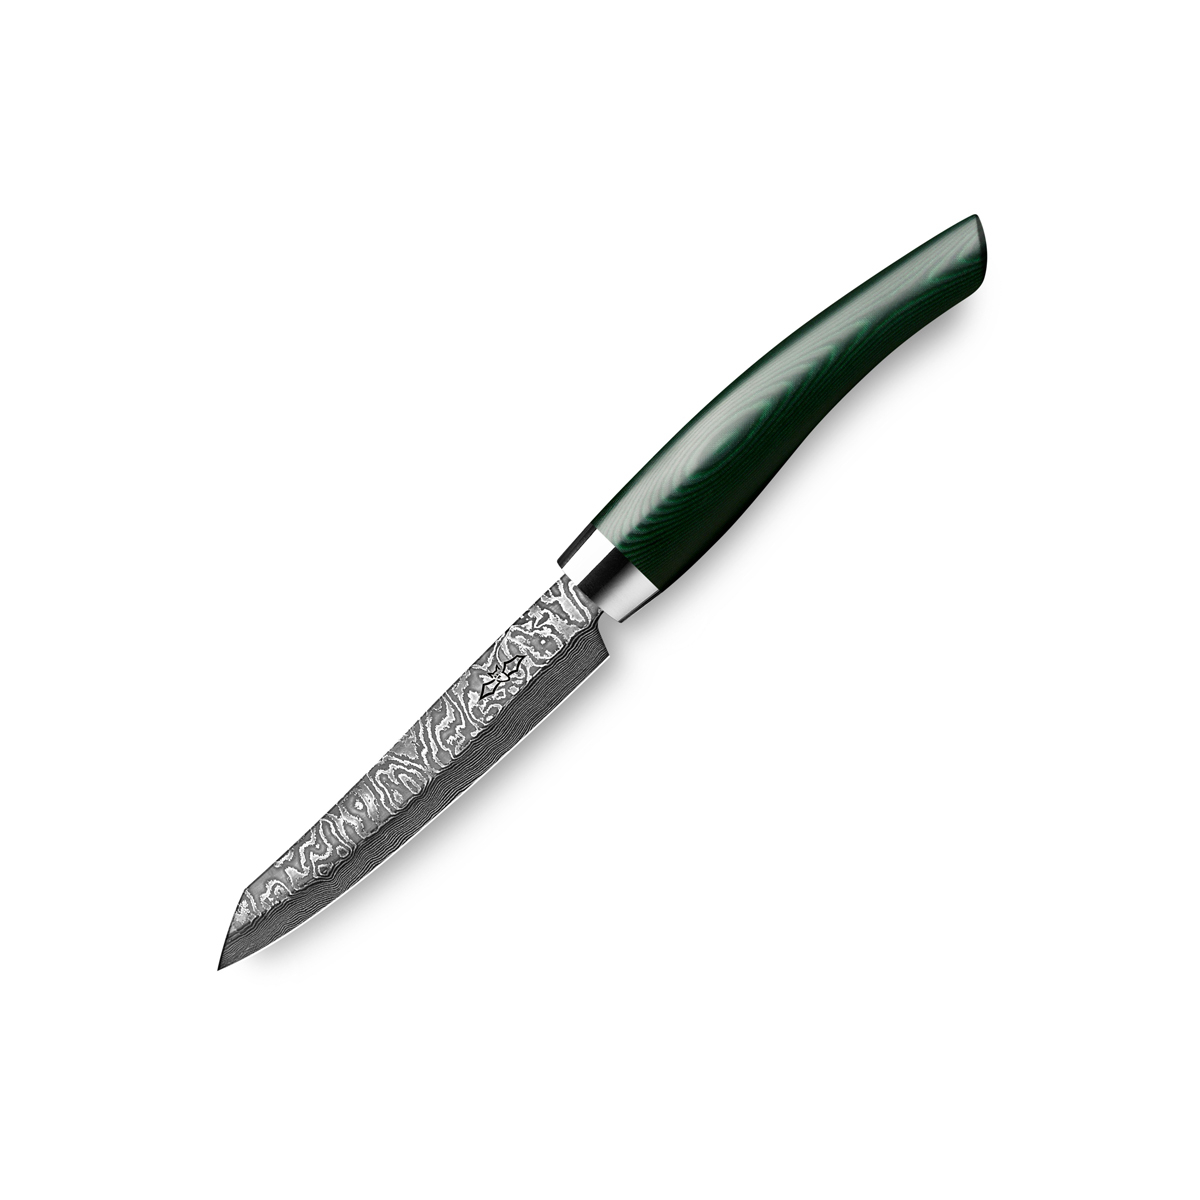 Nesmuk Exklusiv C100 Damast Officemesser 9 cm - Griff Micarta grün